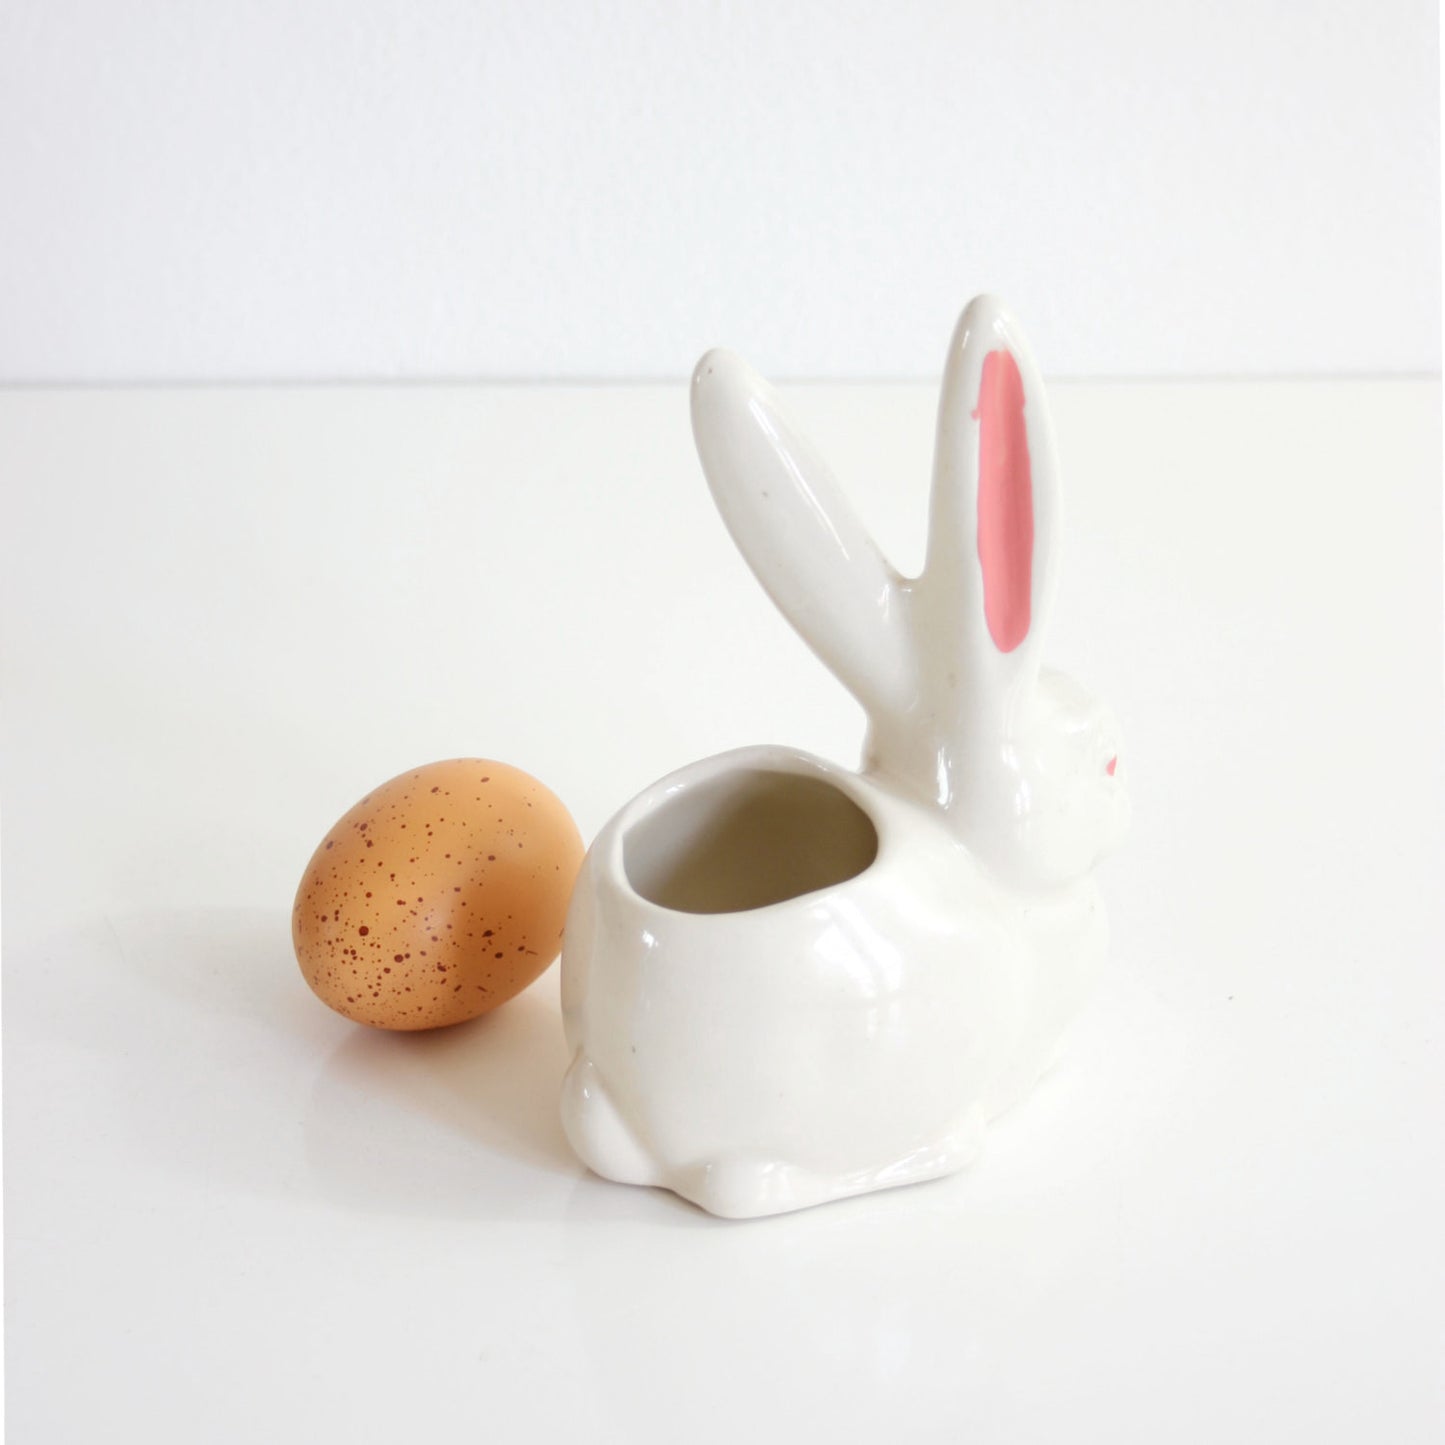 SOLD - Vintage Ceramic Bunny Rabbit Planter